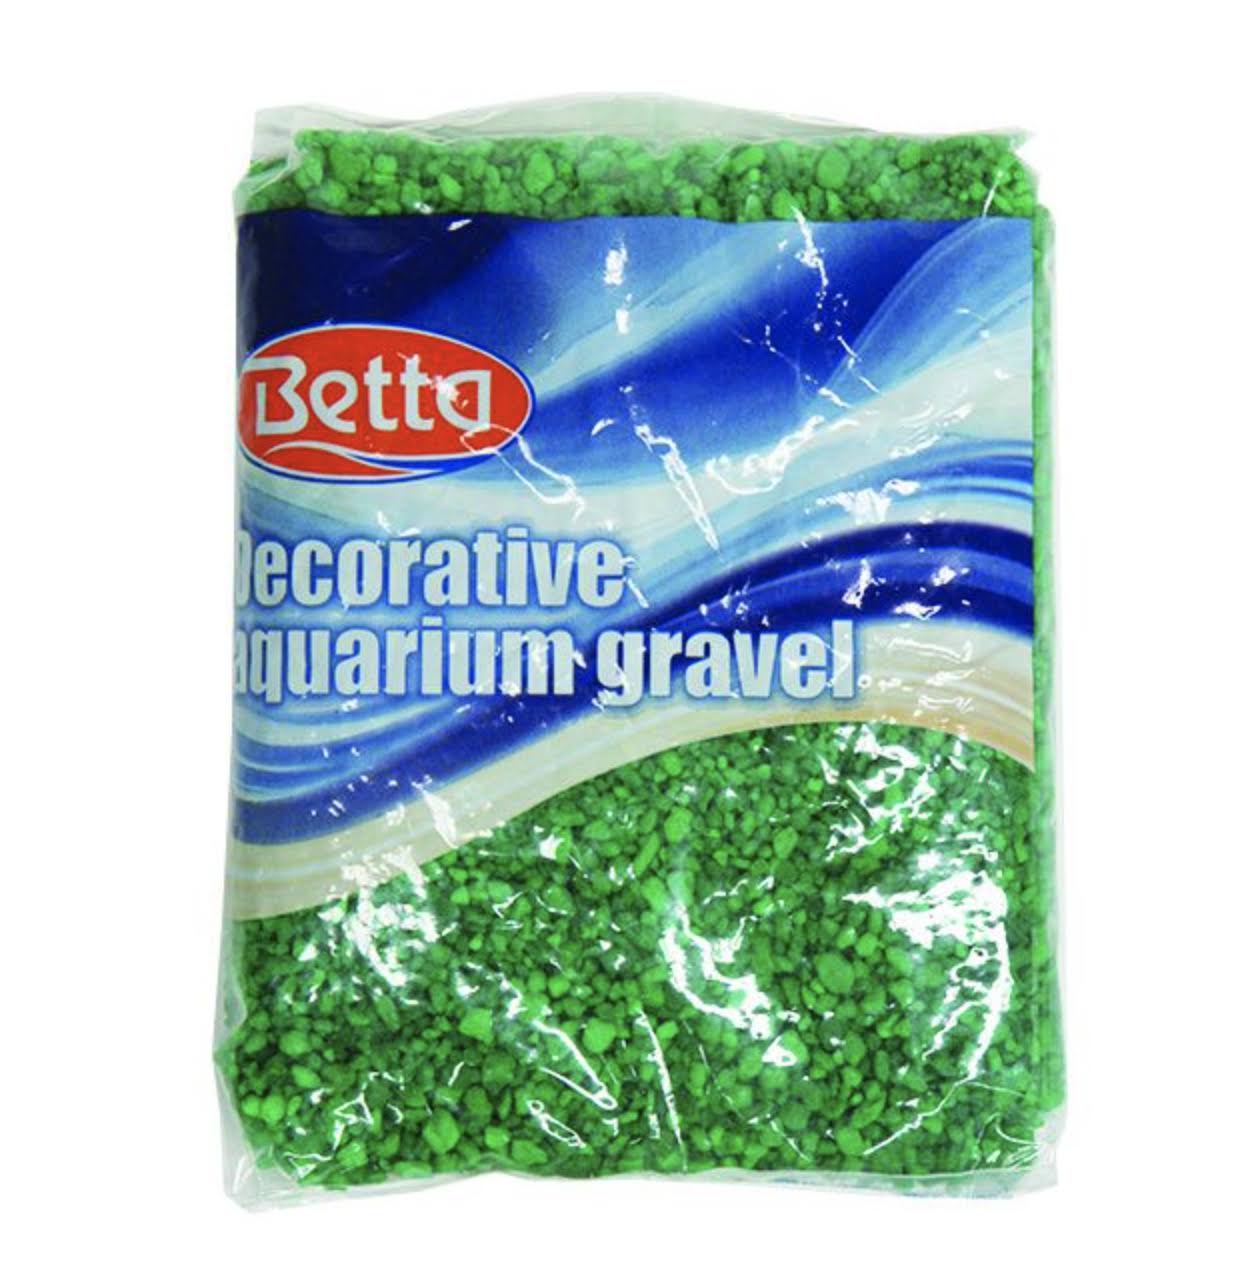 Betta Emerald Green Aquarium Gravel